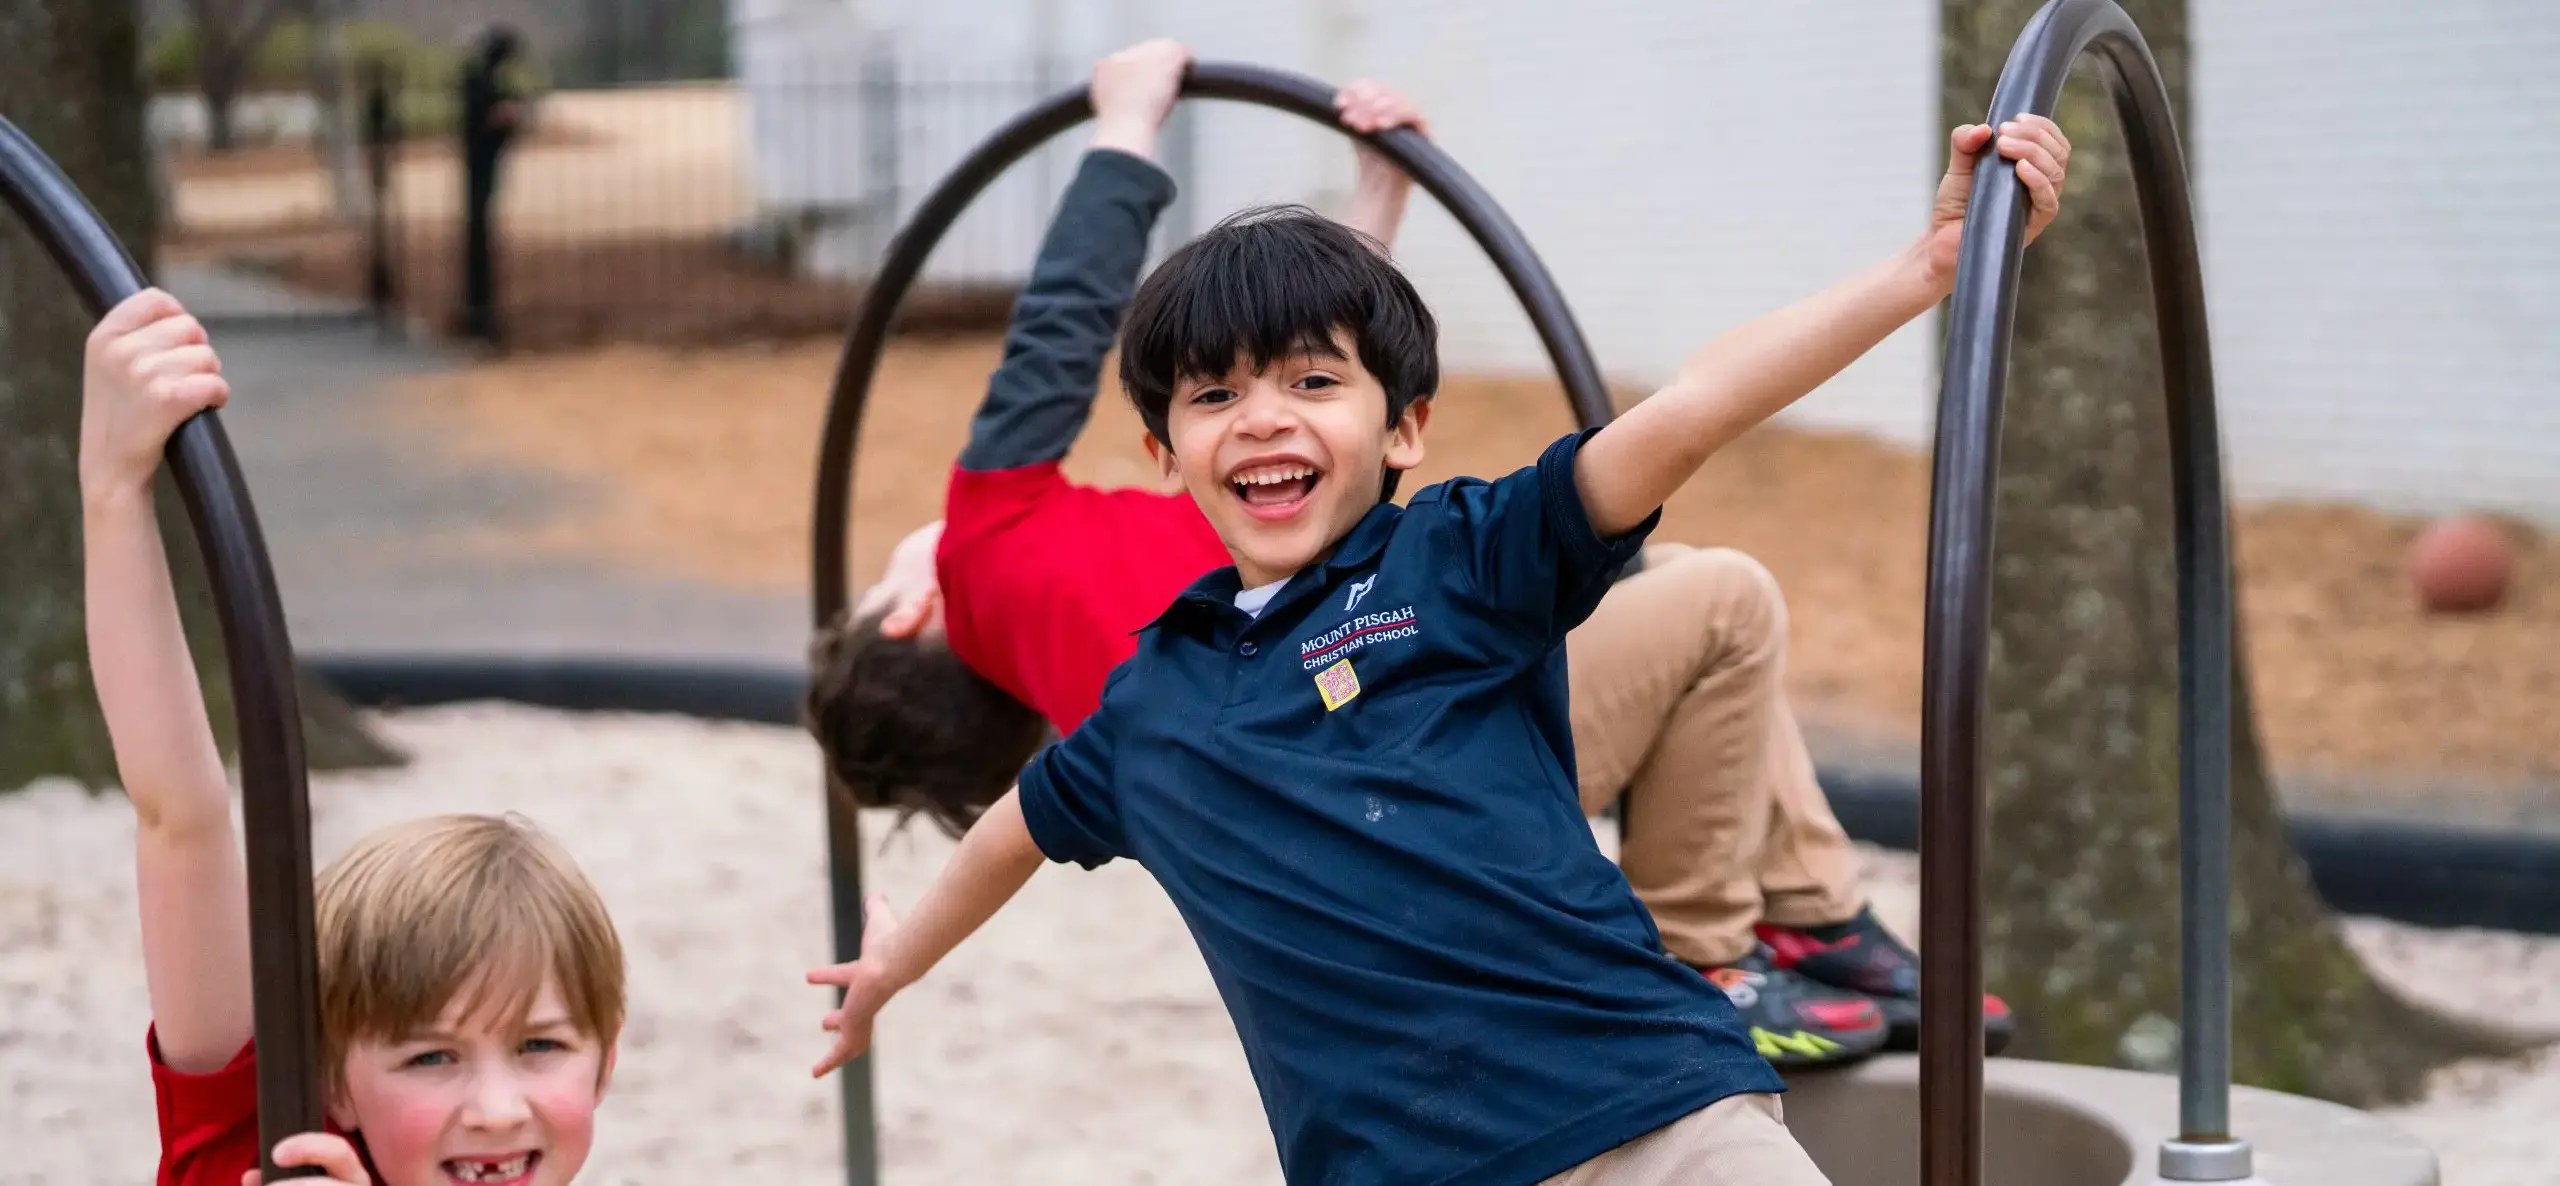 Smiling child on playground